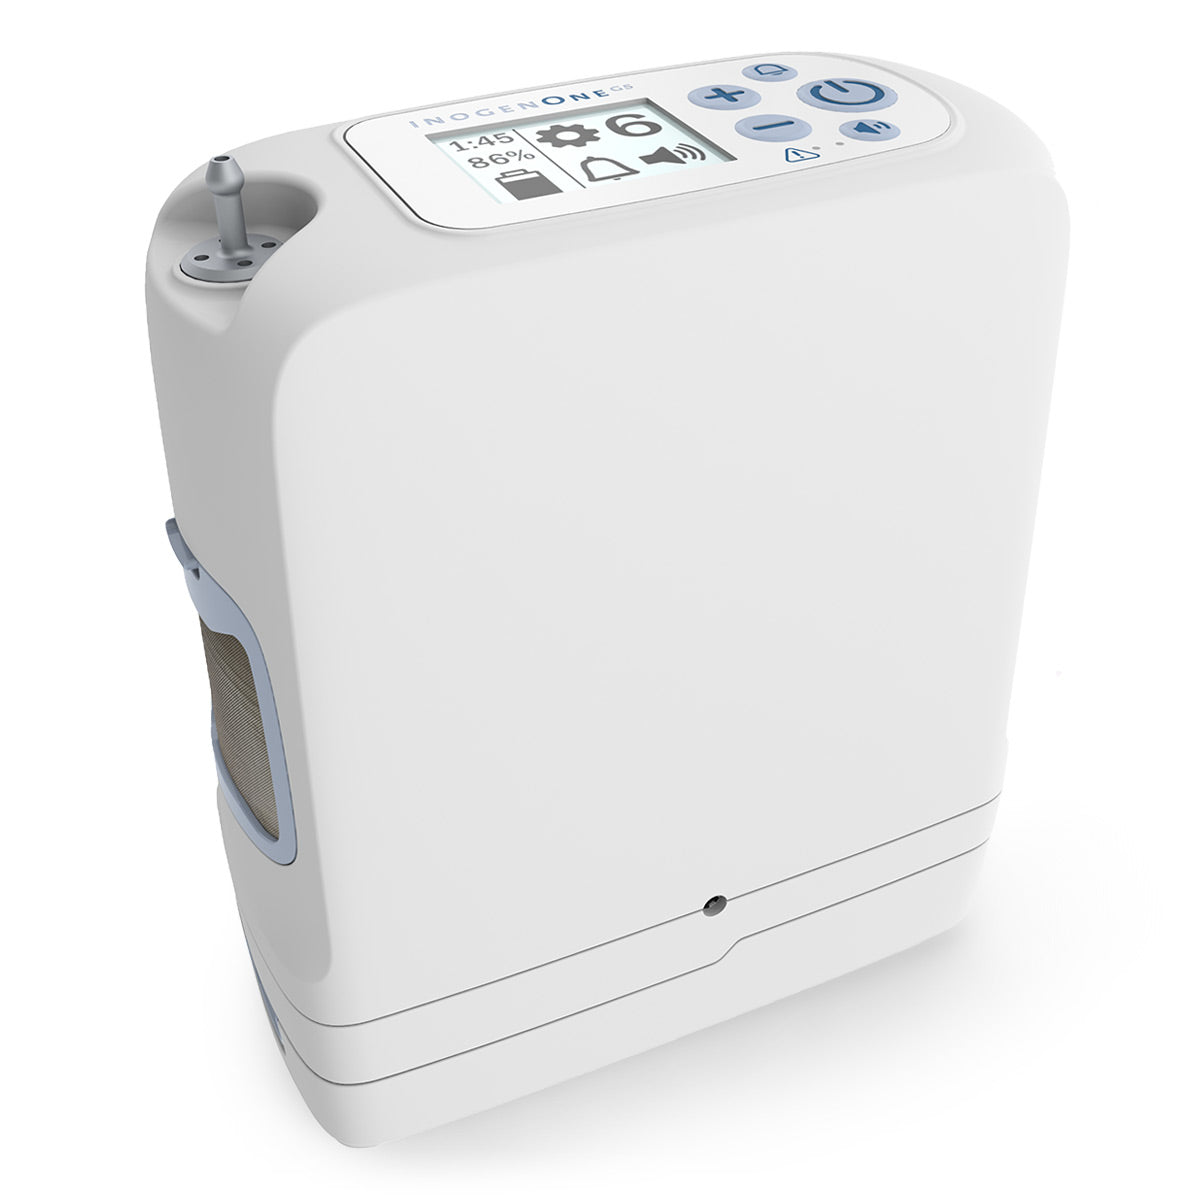 Inogen Oxygen Portable Concentrator